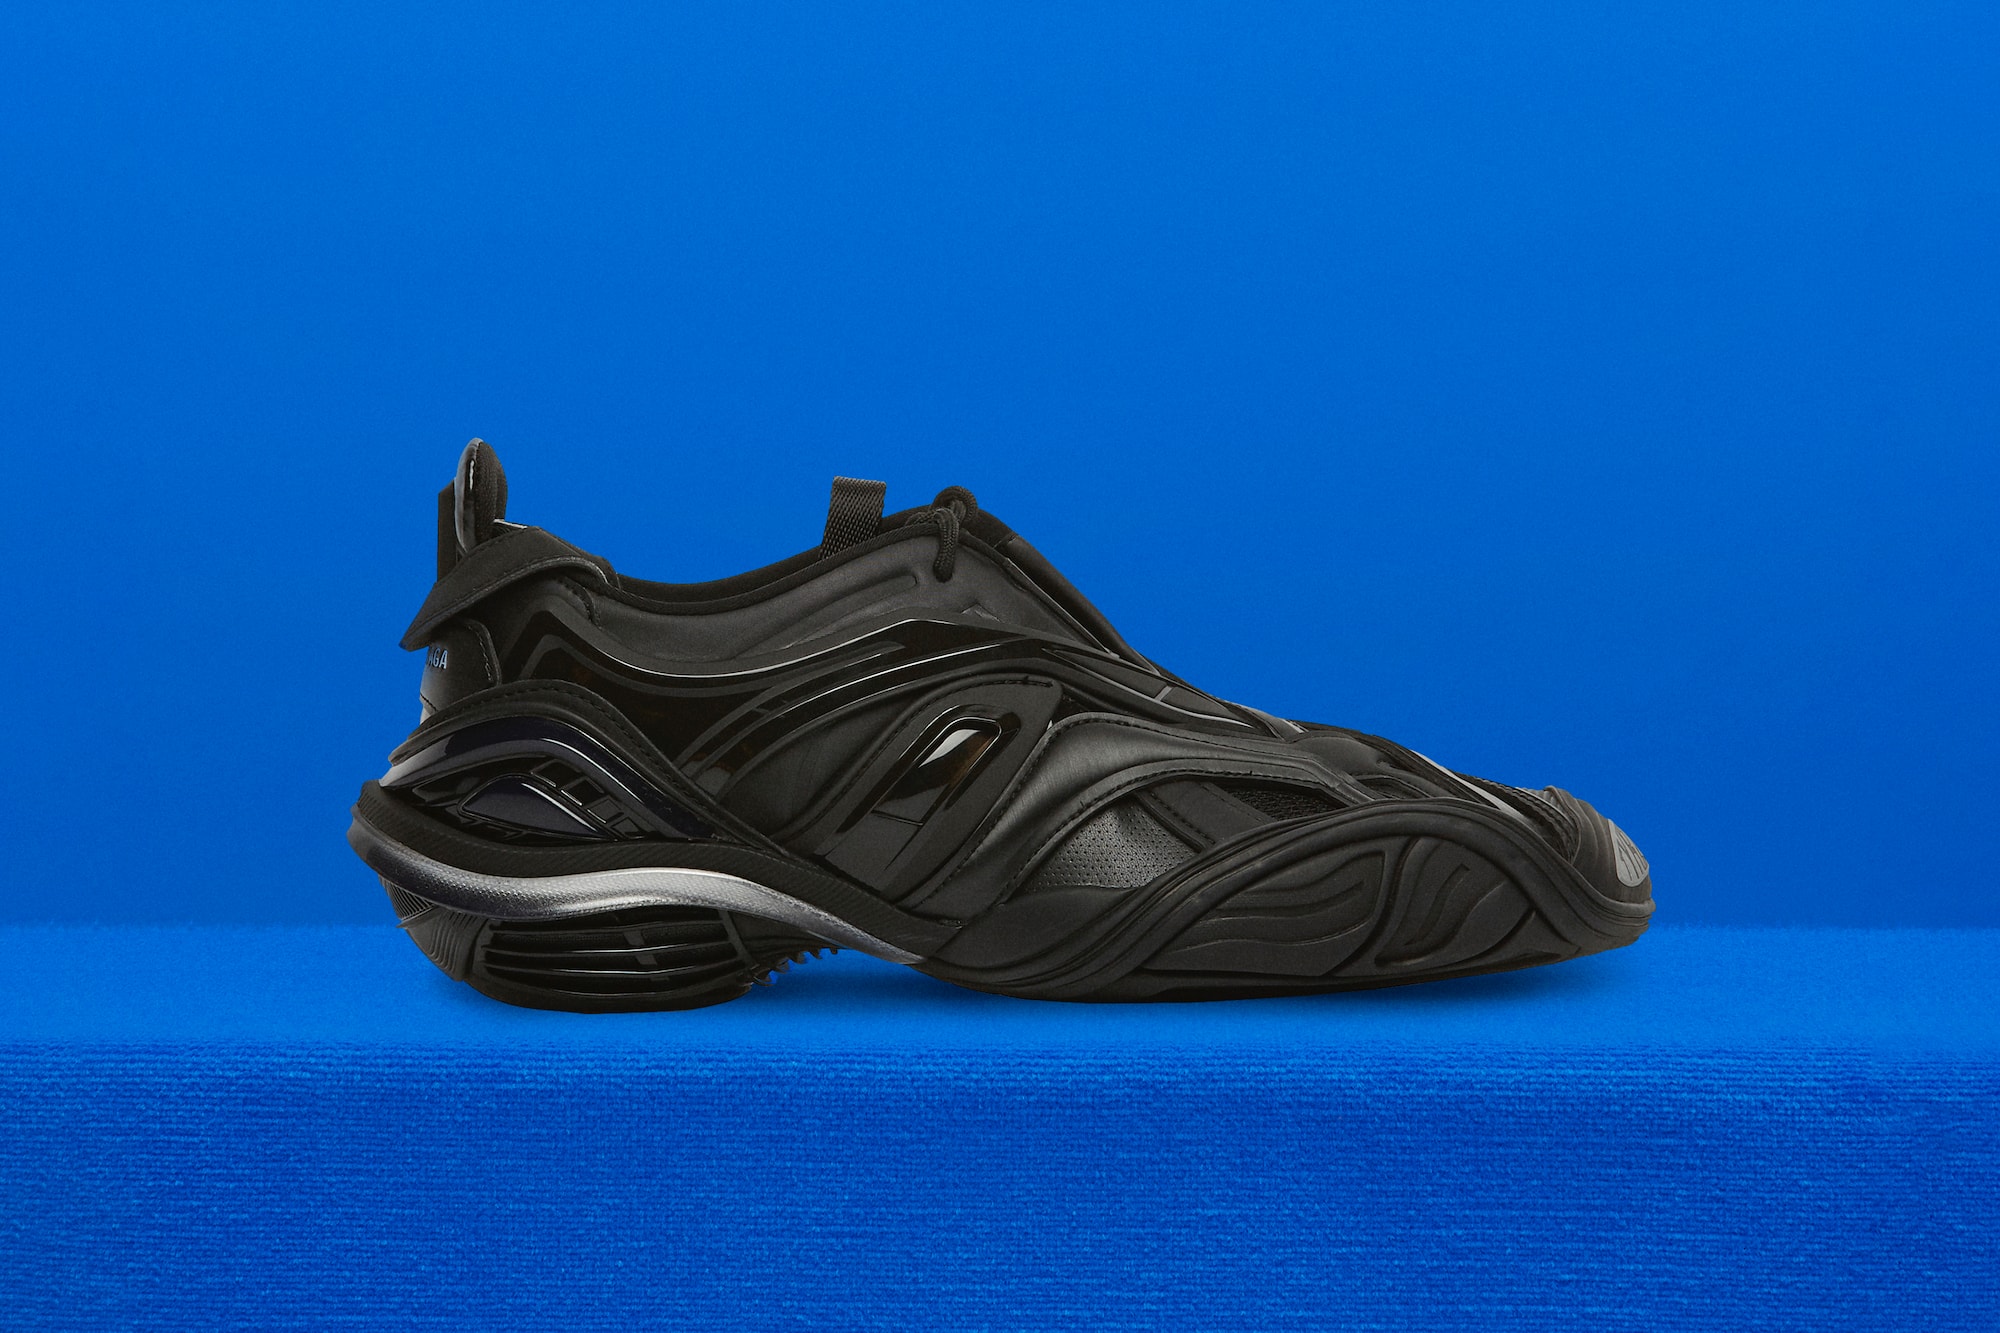 Balenciaga Tyrex SS20 Sneaker Release Date First Look colorways Drop Sporty Anatomy Inspired Trainer Footwear shoe Demna Gvasalia